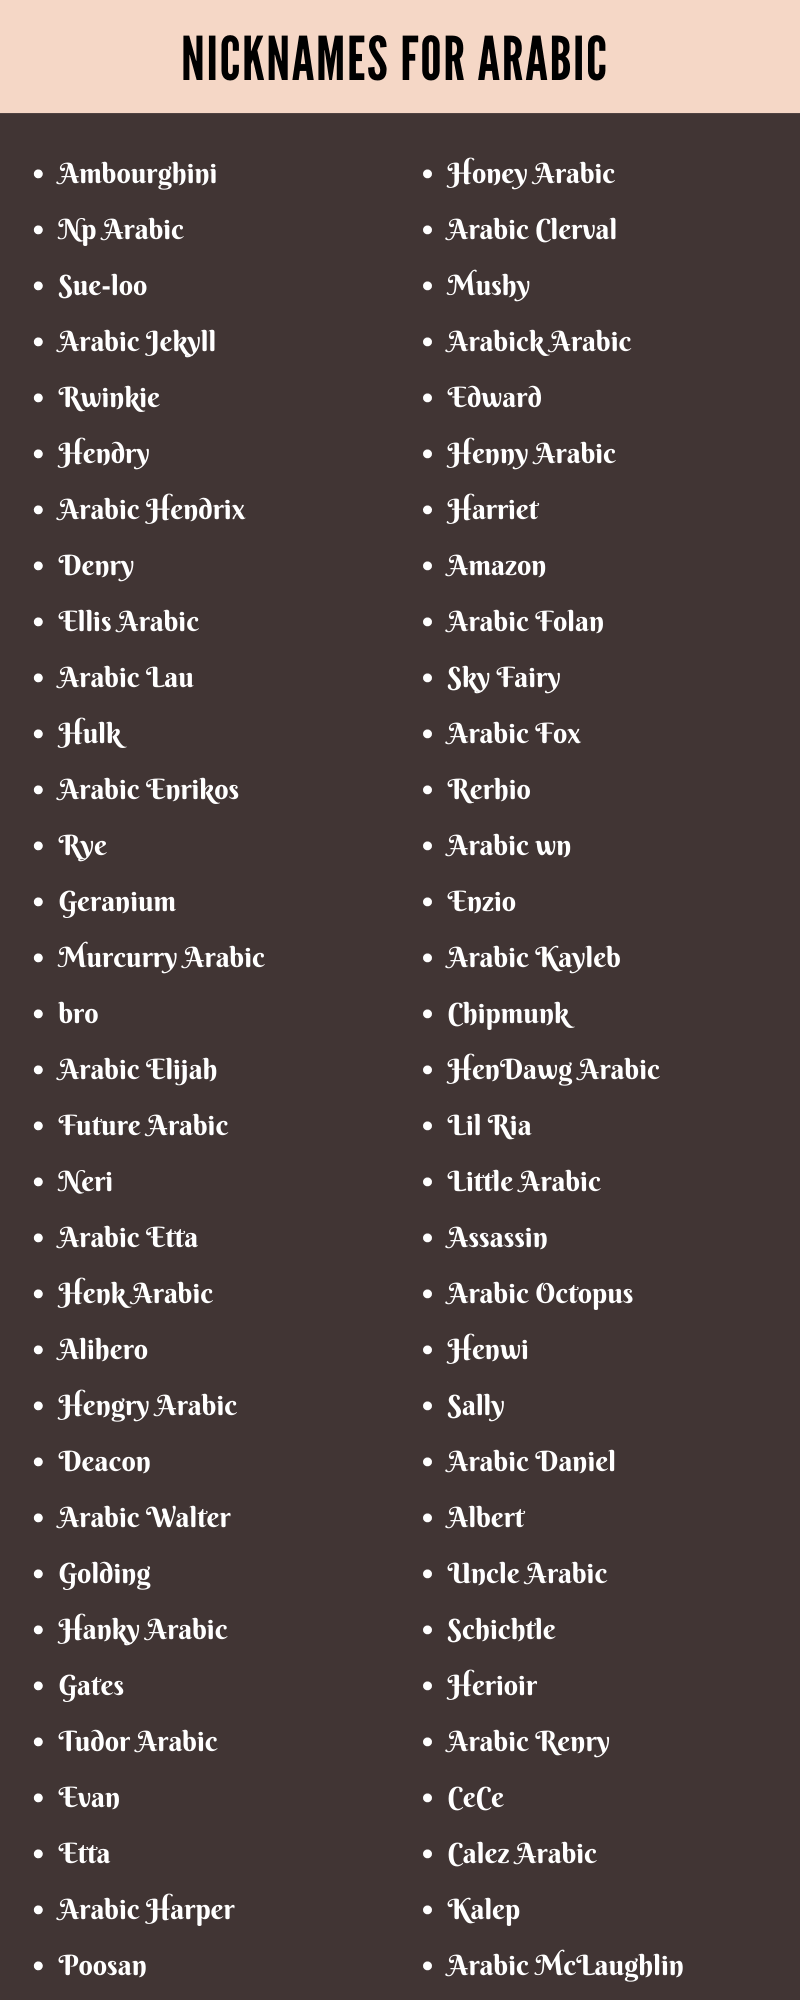 Nicknames for Arabic